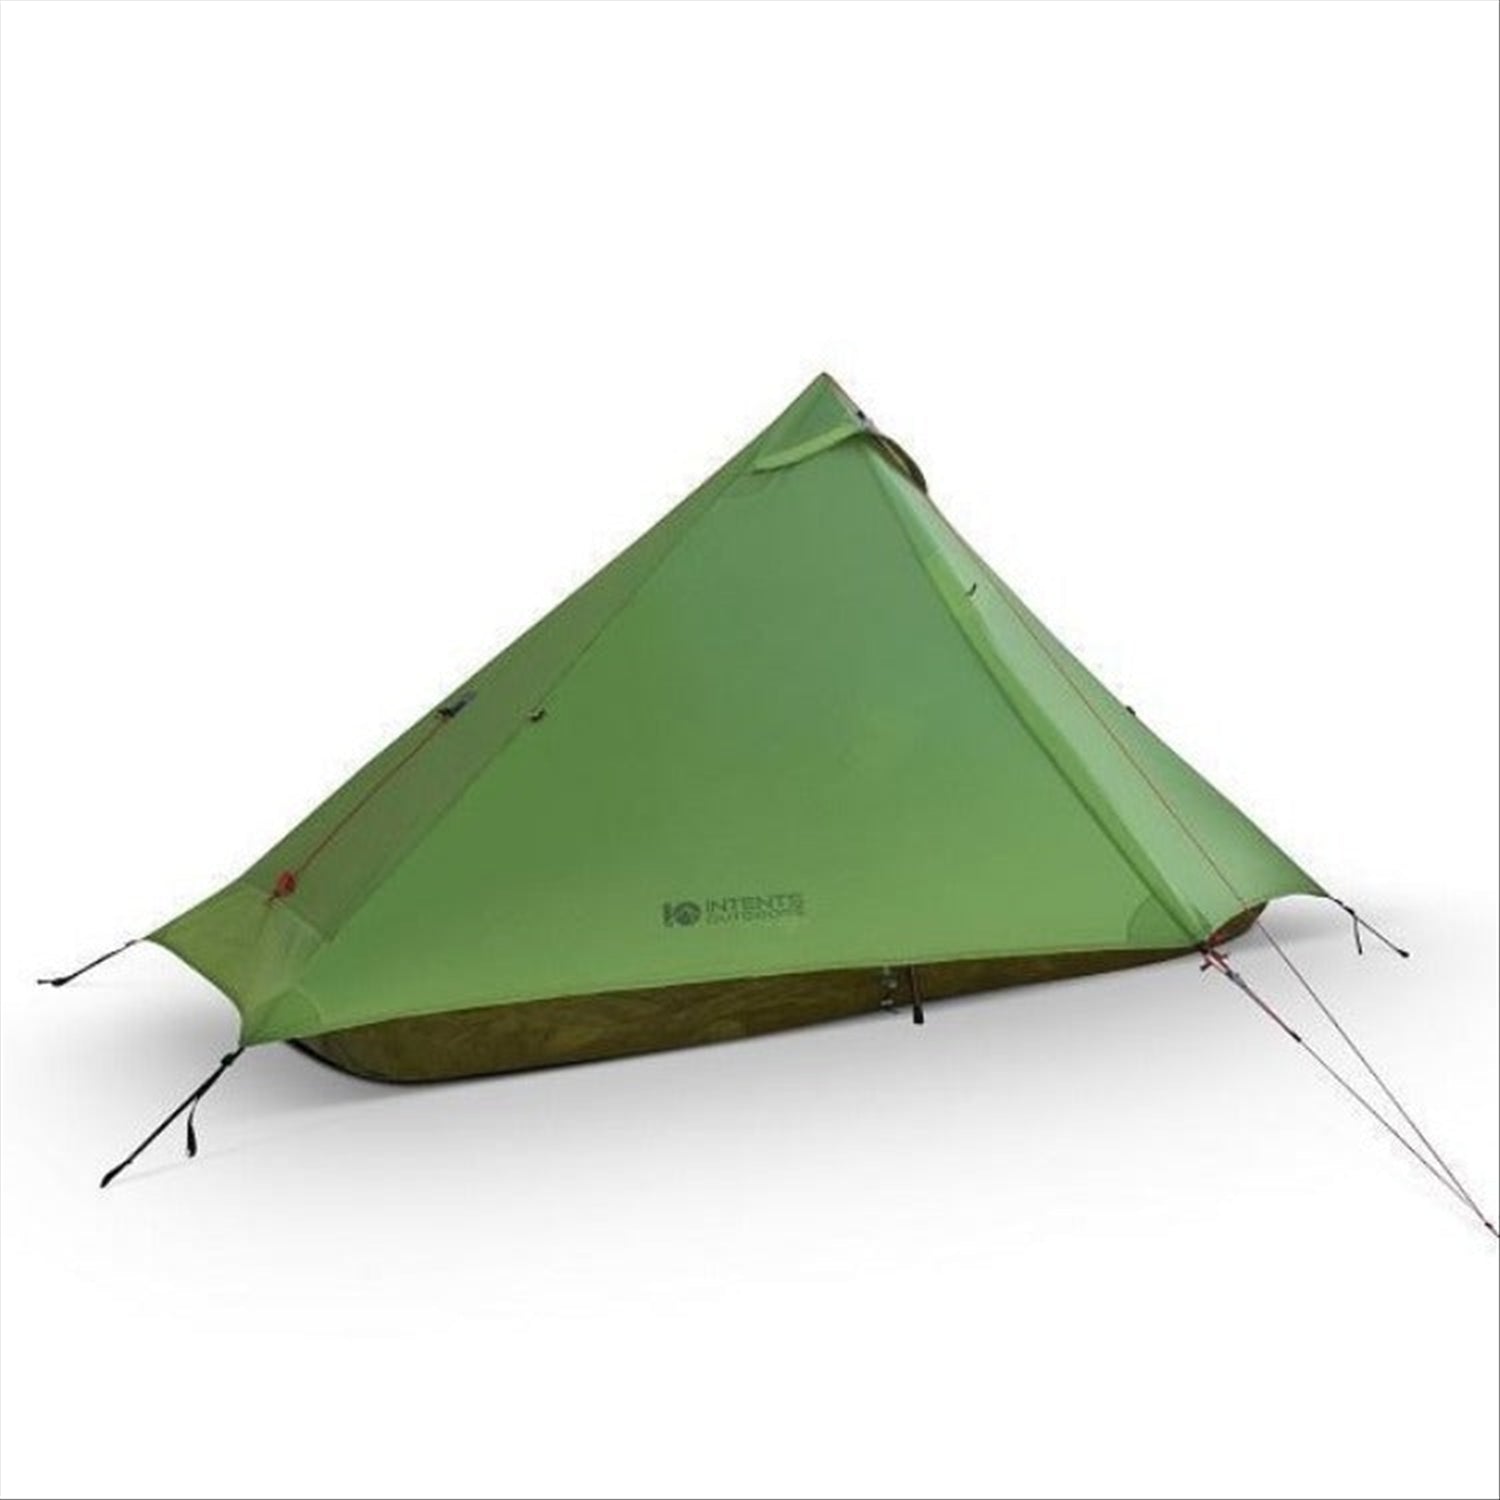 Orson Orson Odyssey - Silnylon 1 person tent, single wall, 990g